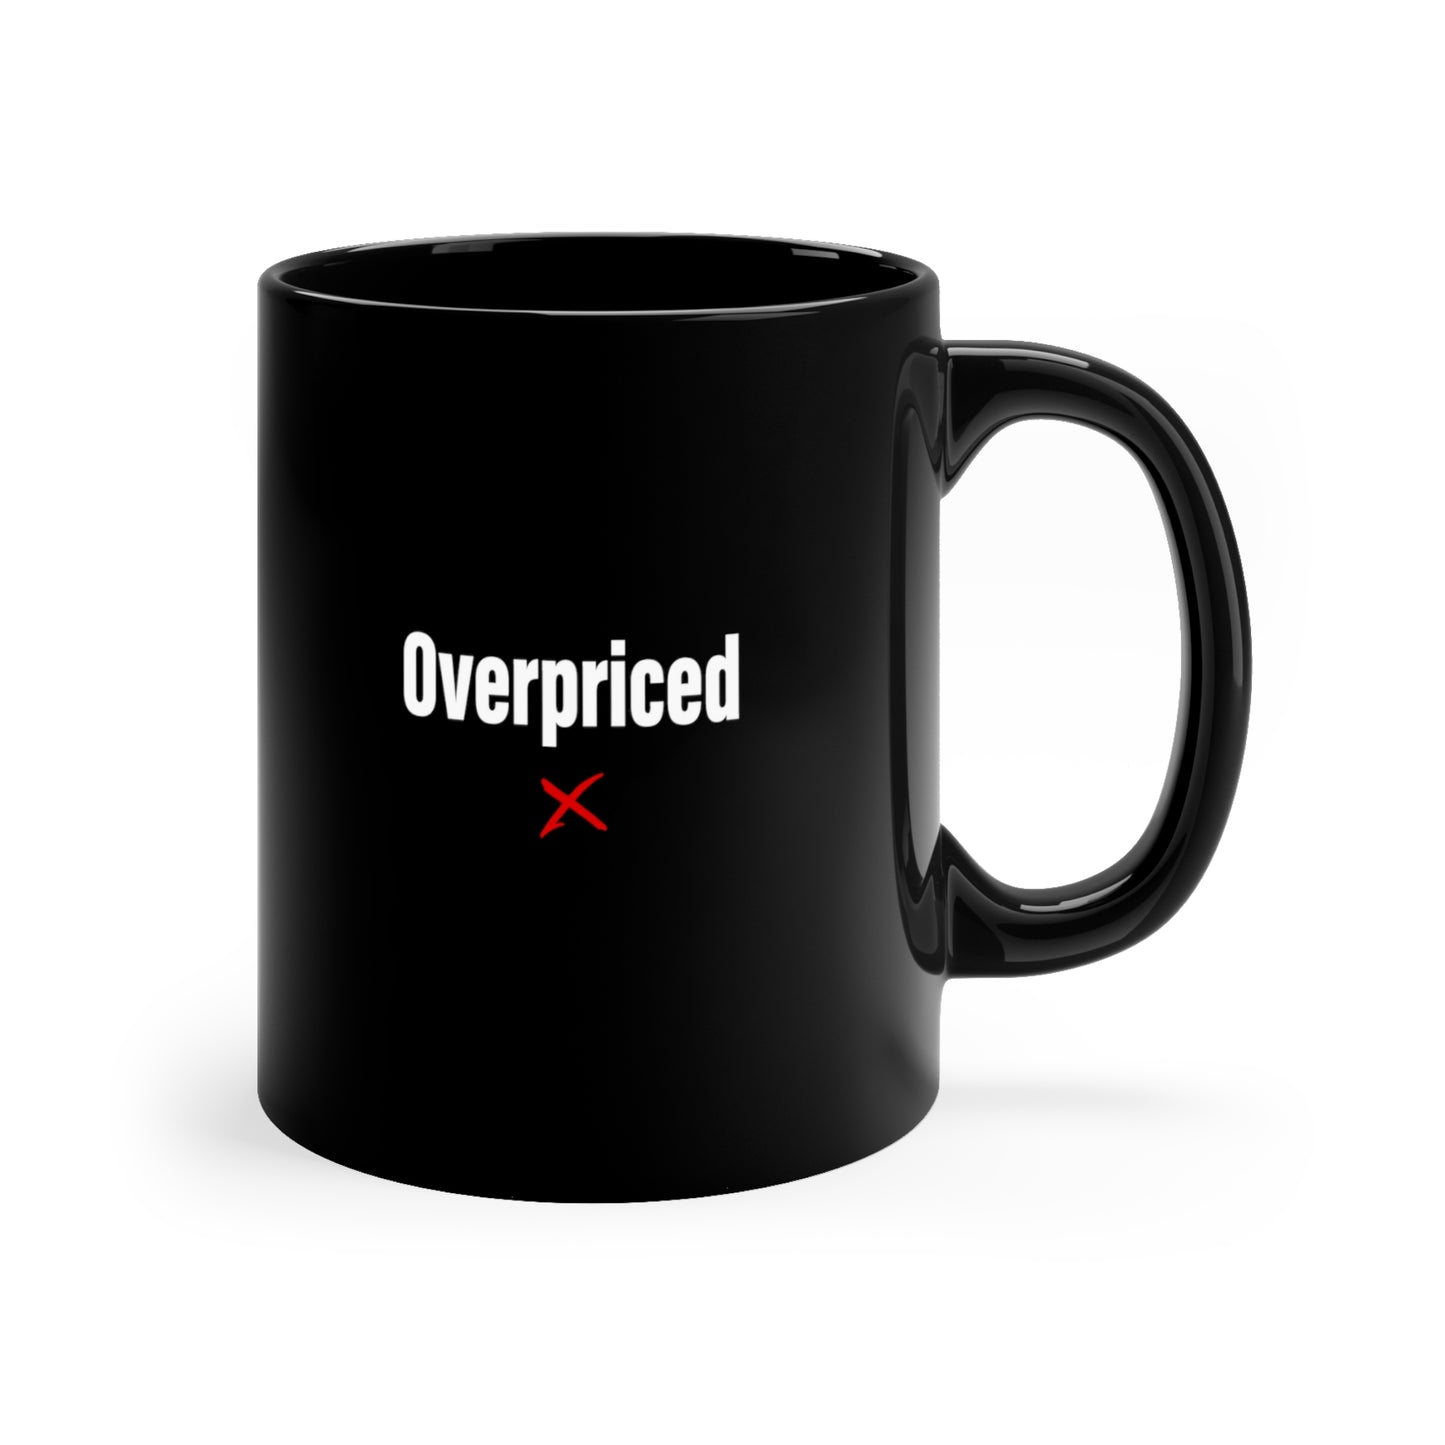 Overpriced - Mug